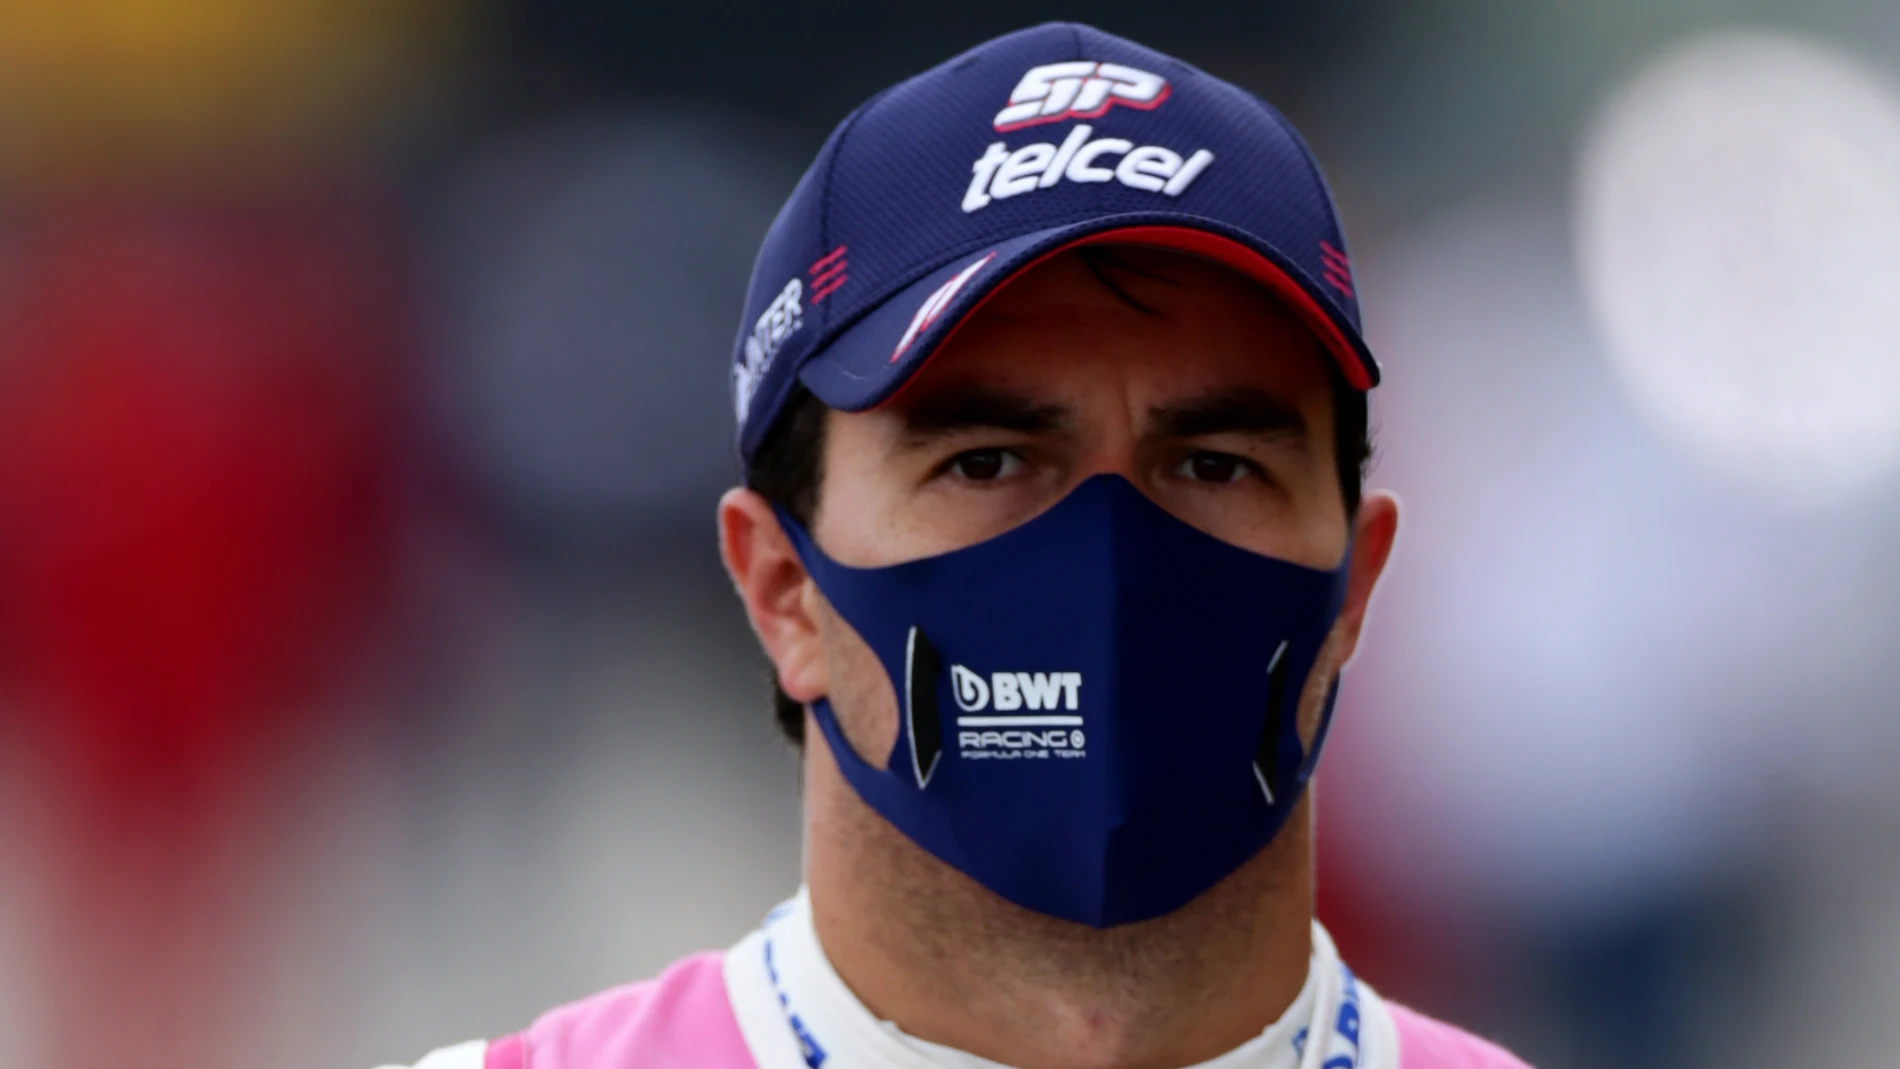 Sergio Pérez, primer piloto de Fórmula 1 que da positivo por coronavirus, no correrá el GP de Gran Bretaña